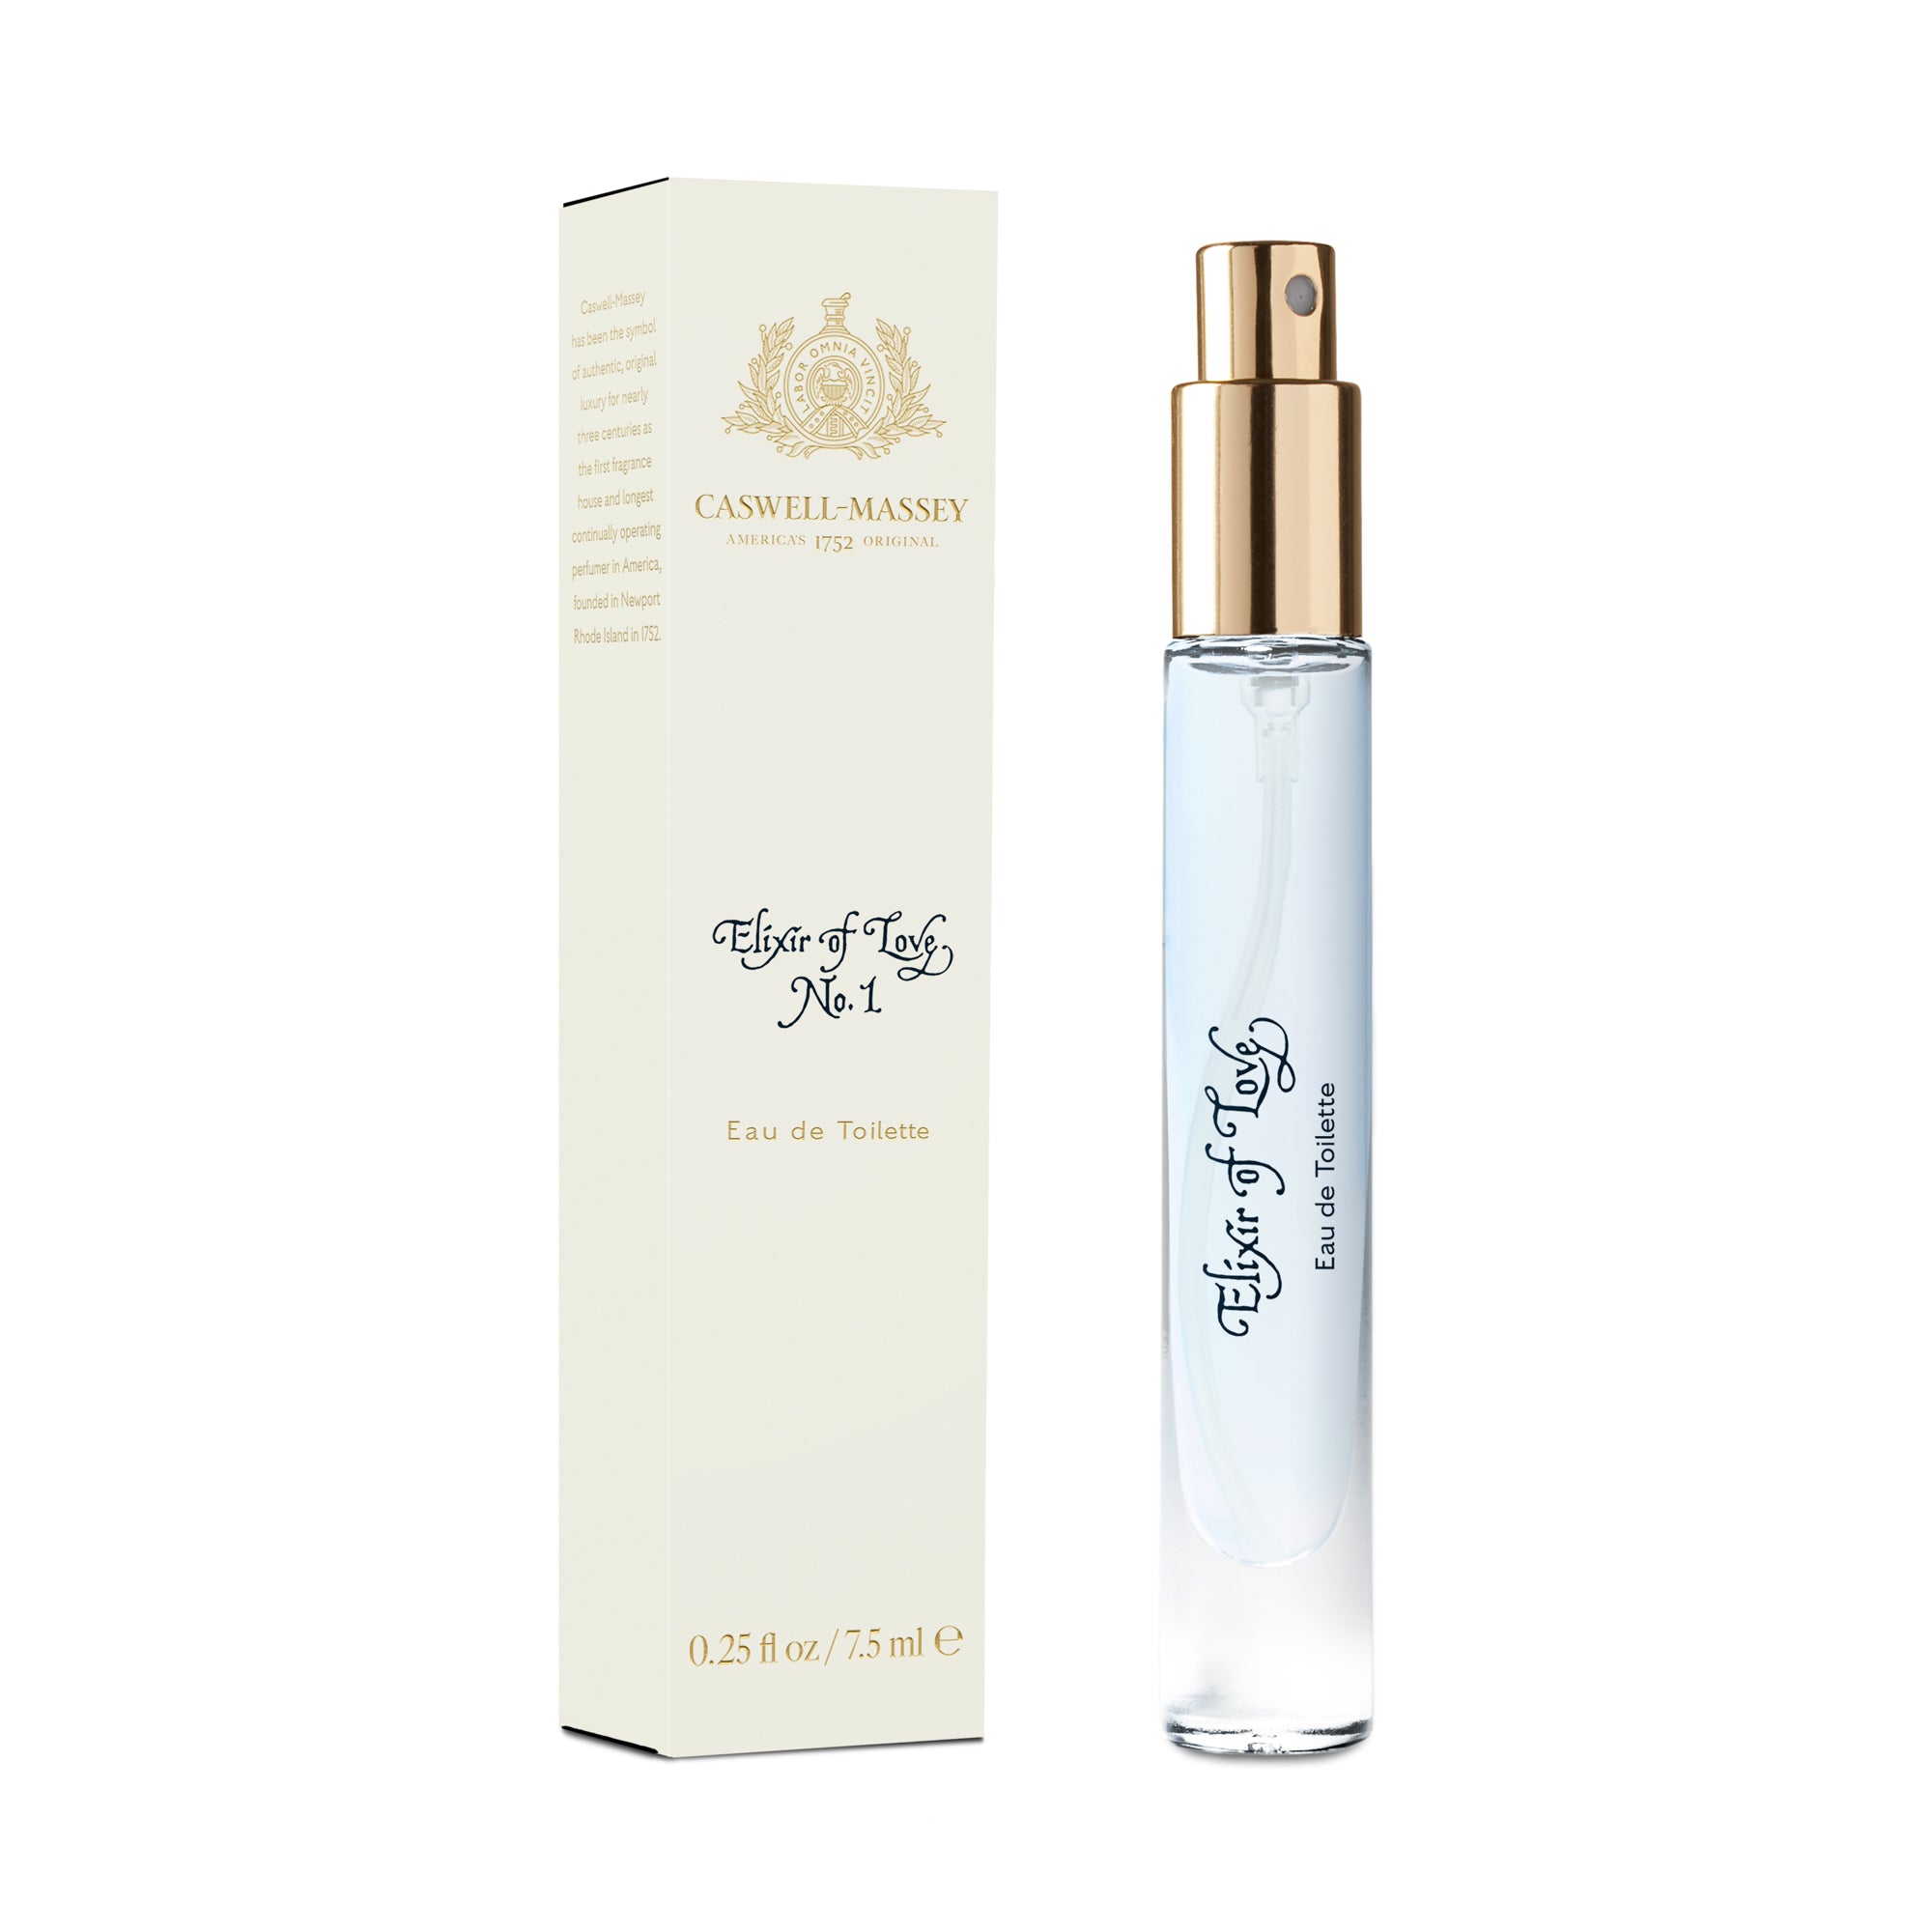 Full Review: Louis Vuitton Women's Parfums/Perfume (All 7) 